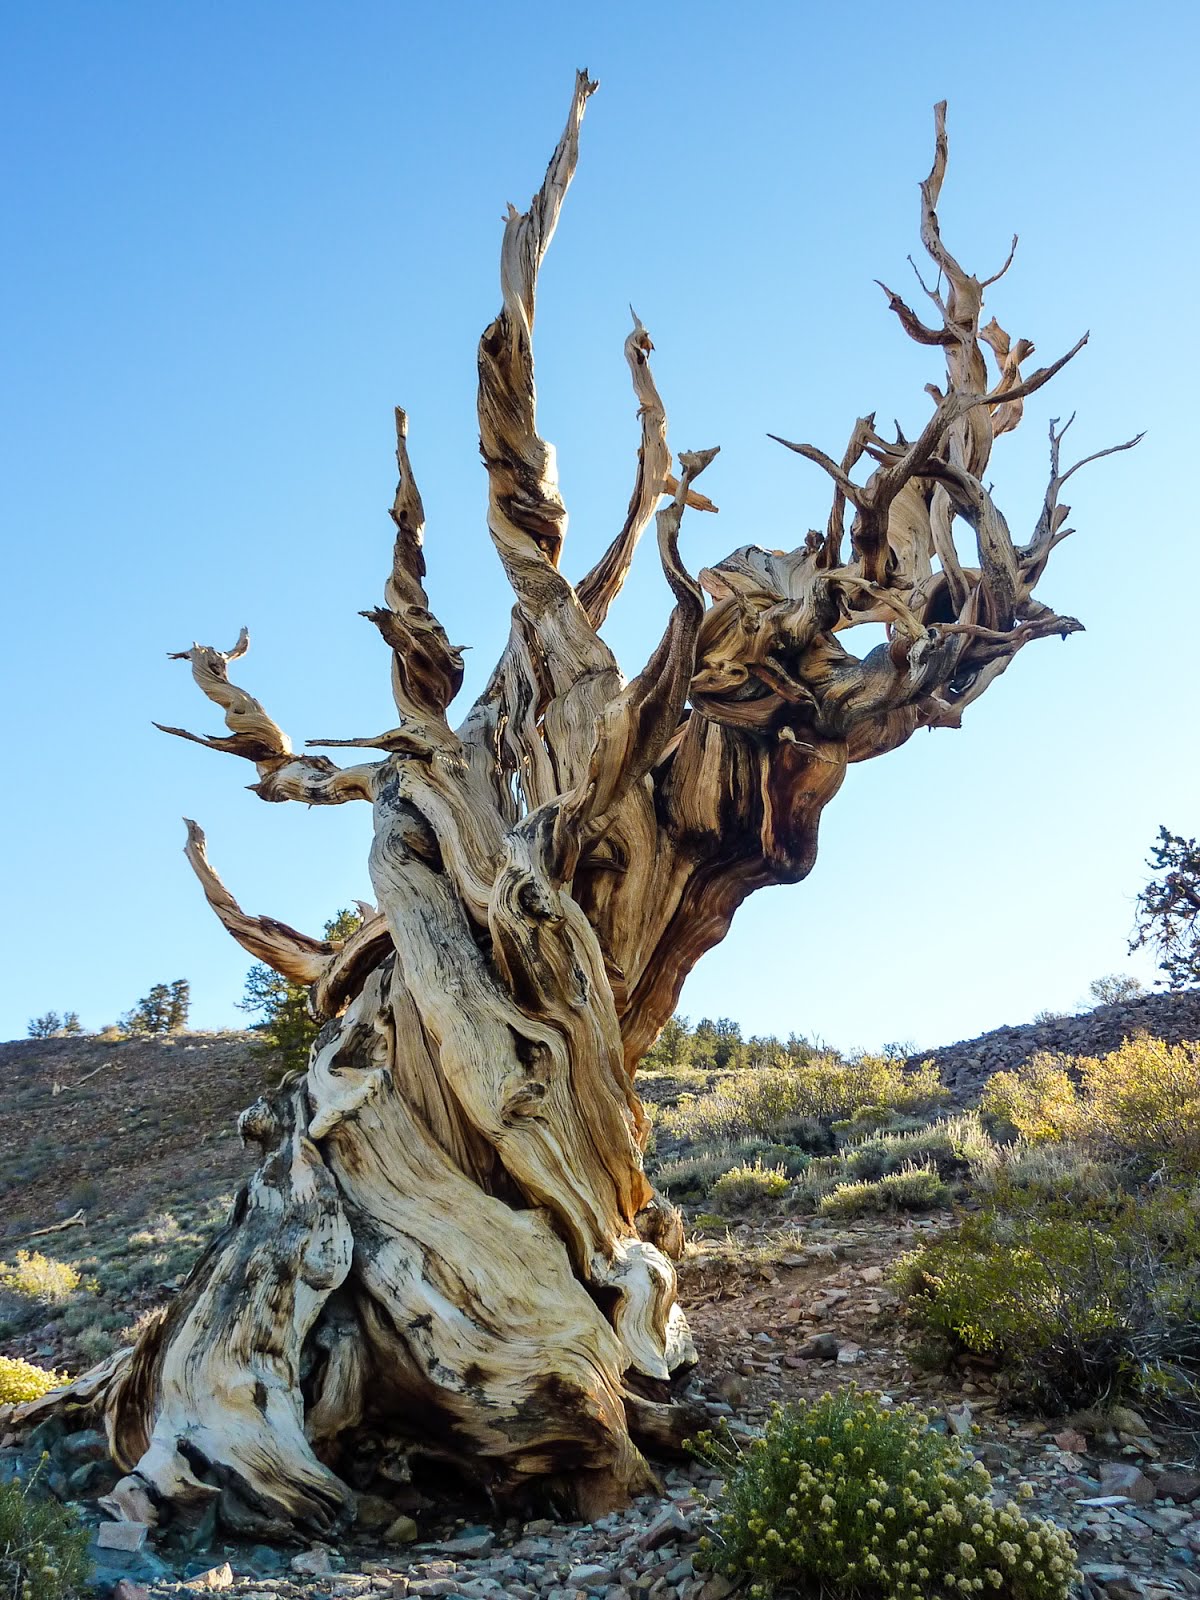 Bristlecone Pine to convert to grayscale B&W